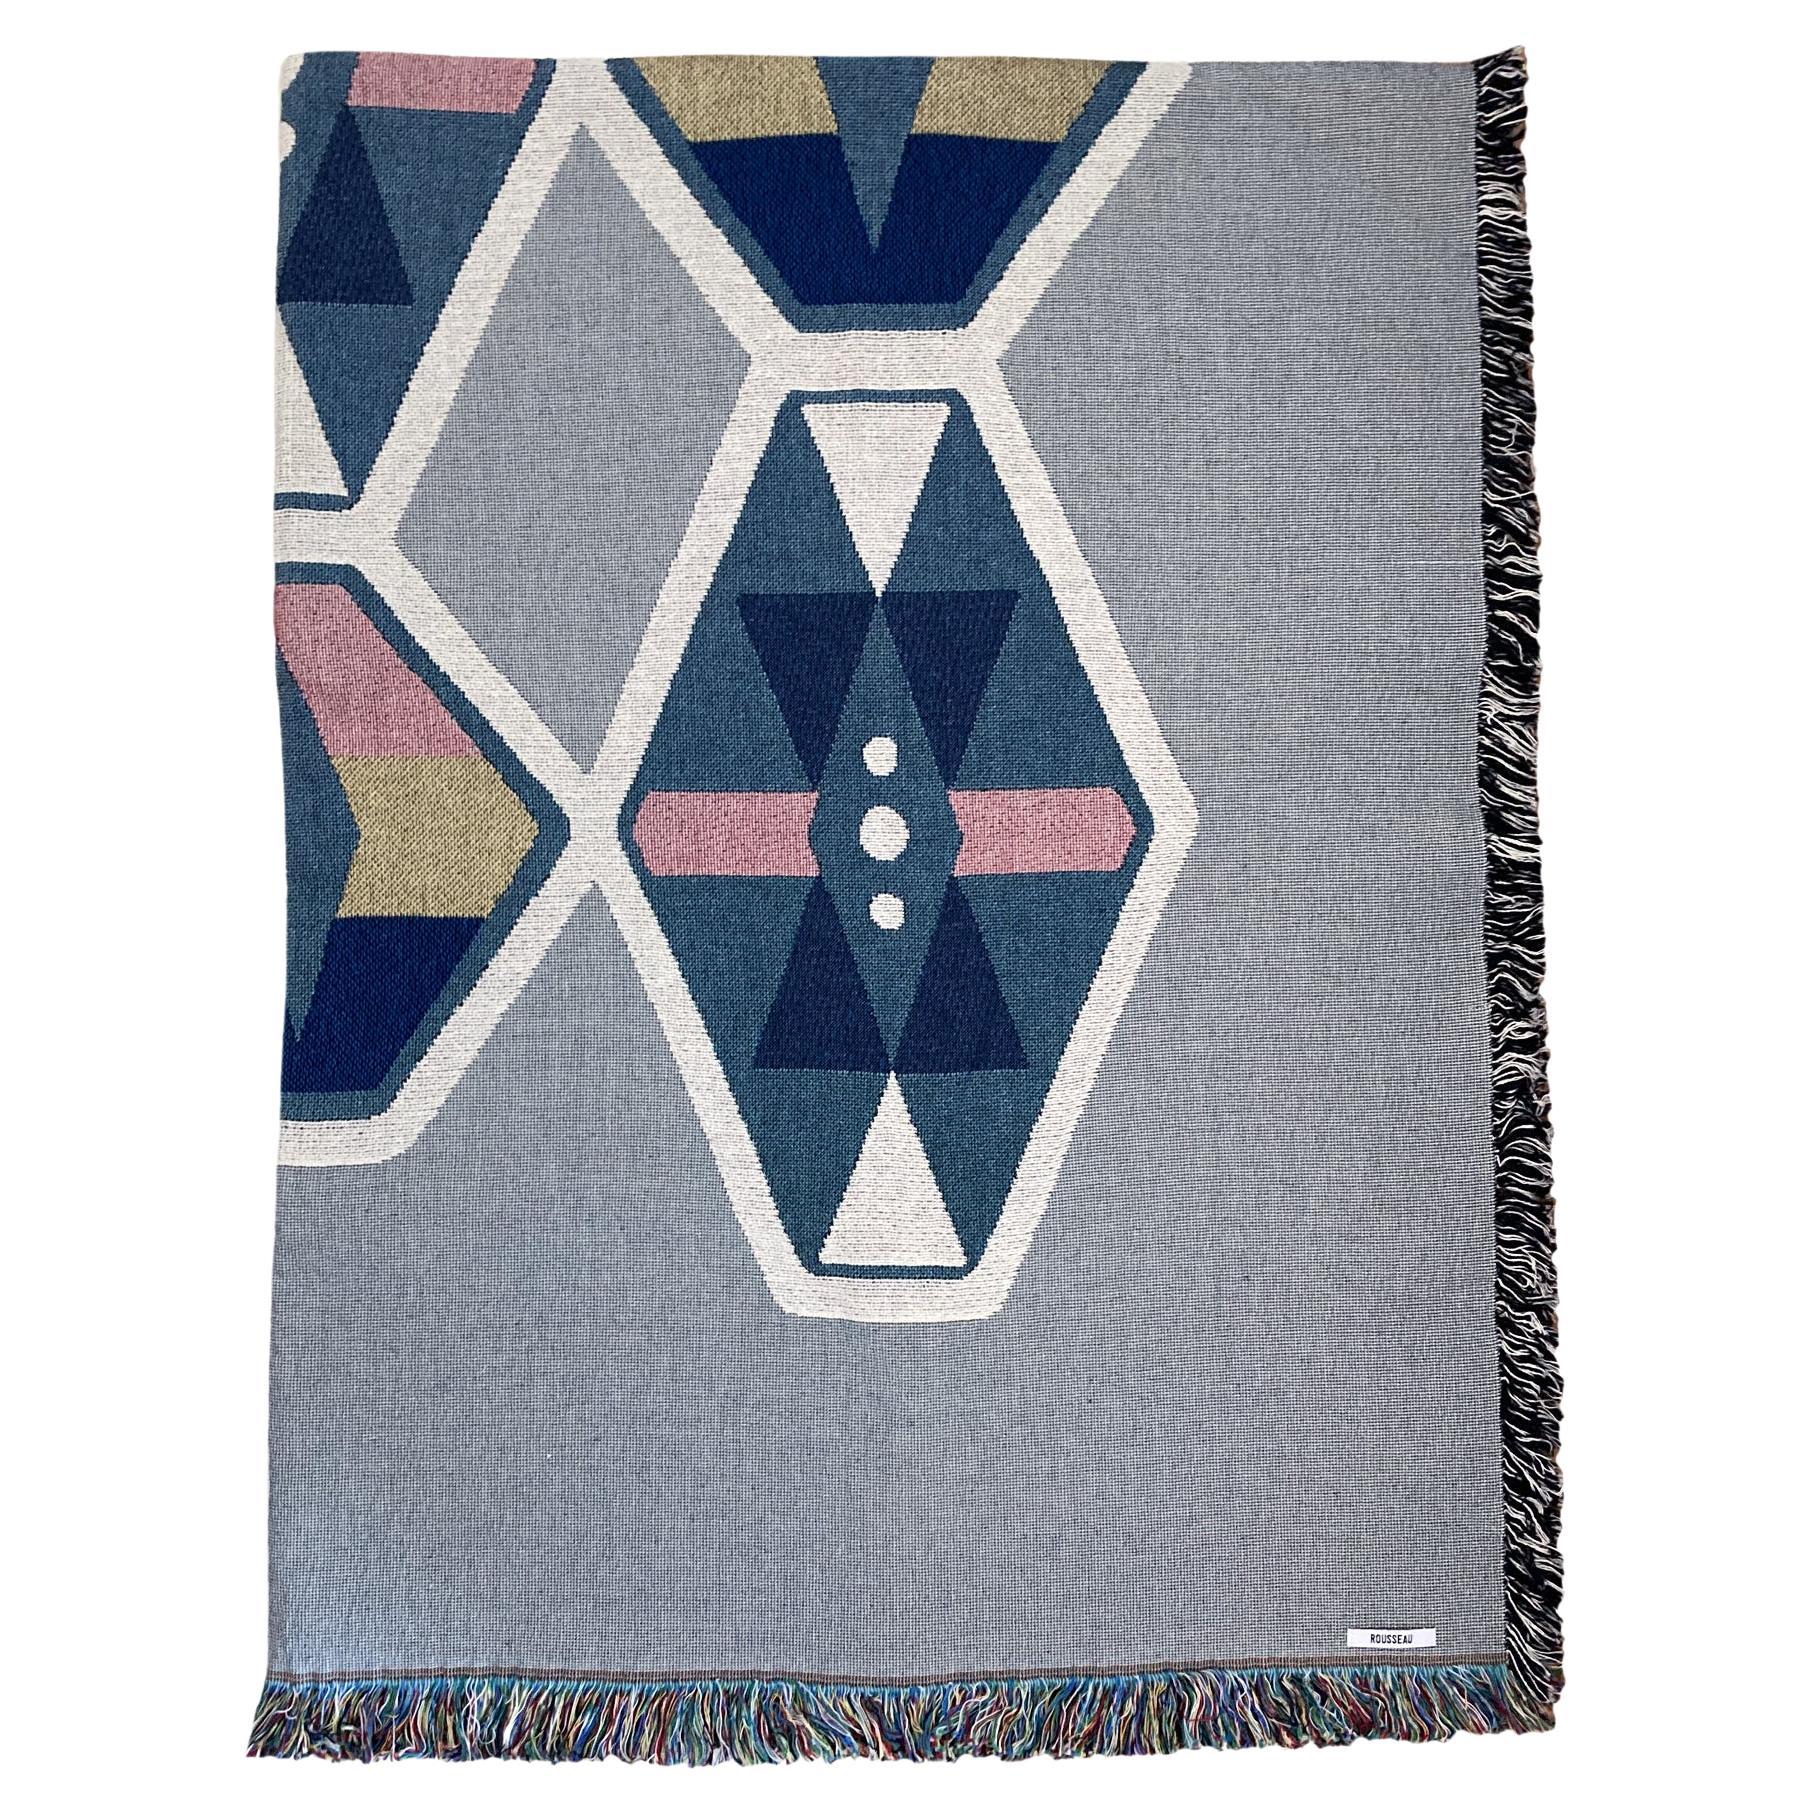 Loom Woven Cotton Throw Blanket, Gray Fog Geo, 54 x 72